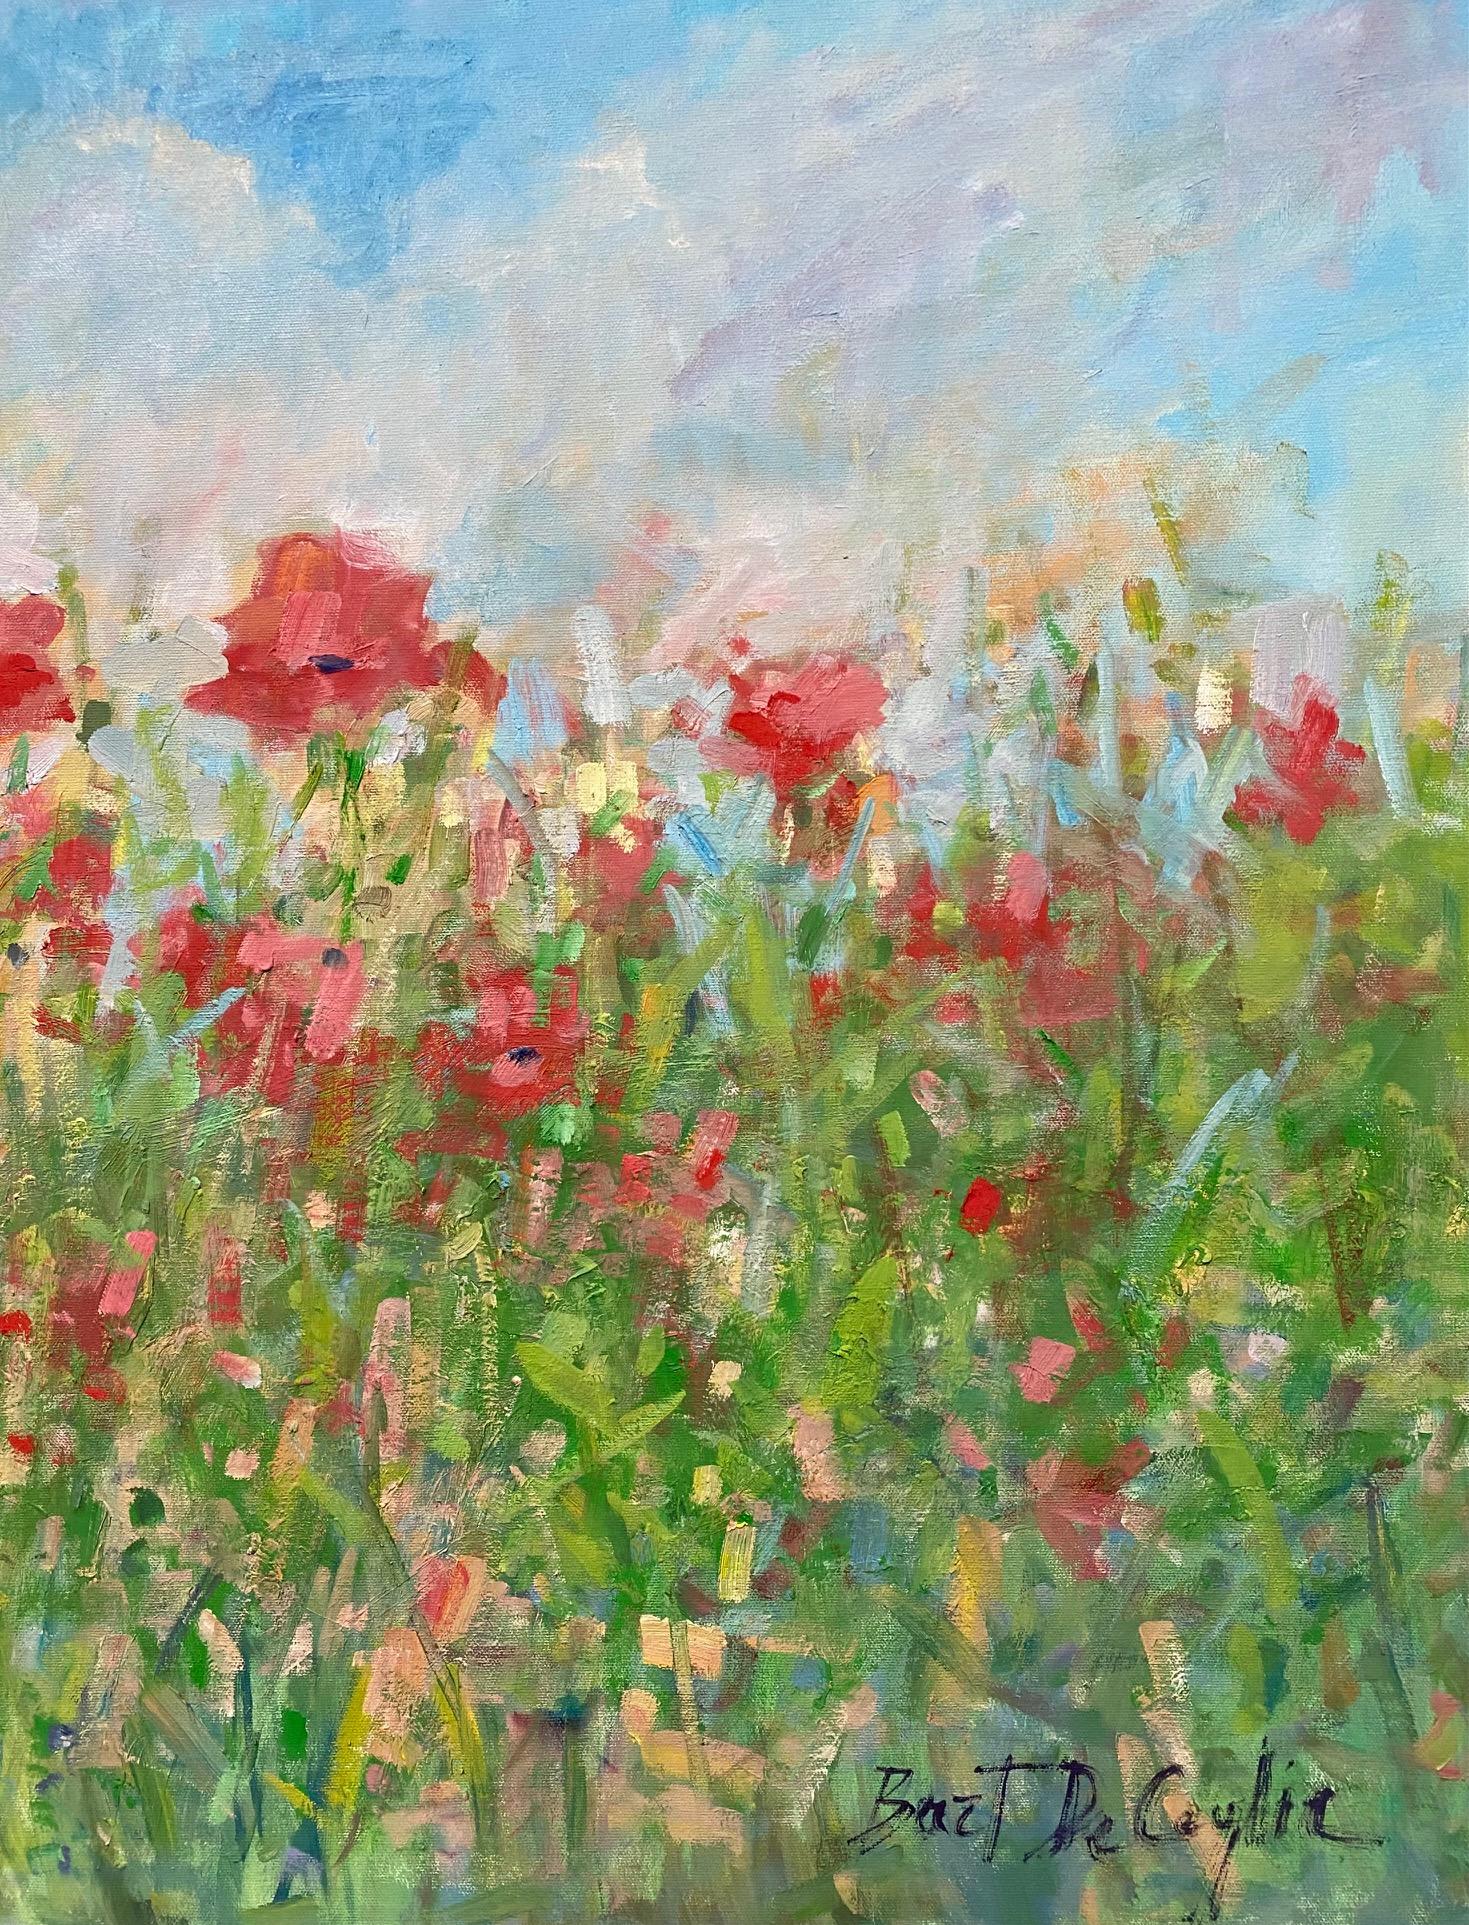 Field of Poppies, original 29x47 contemporary floral landscape - Brown Landscape Painting by Bart DeCeglie